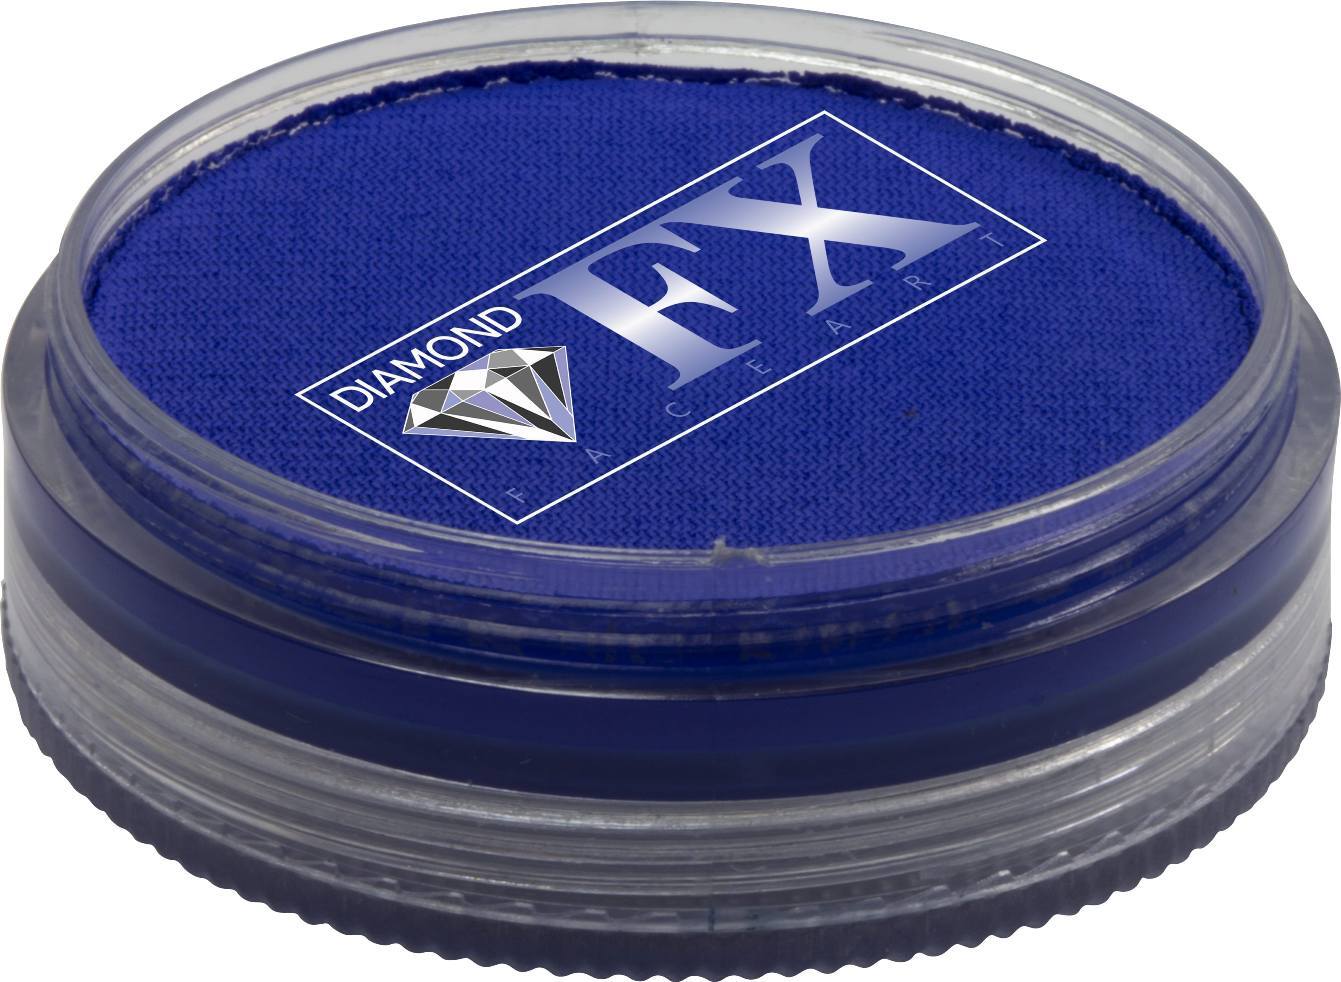 Diamond FX Blue Neon 45g (Cosmetic) - Small Image